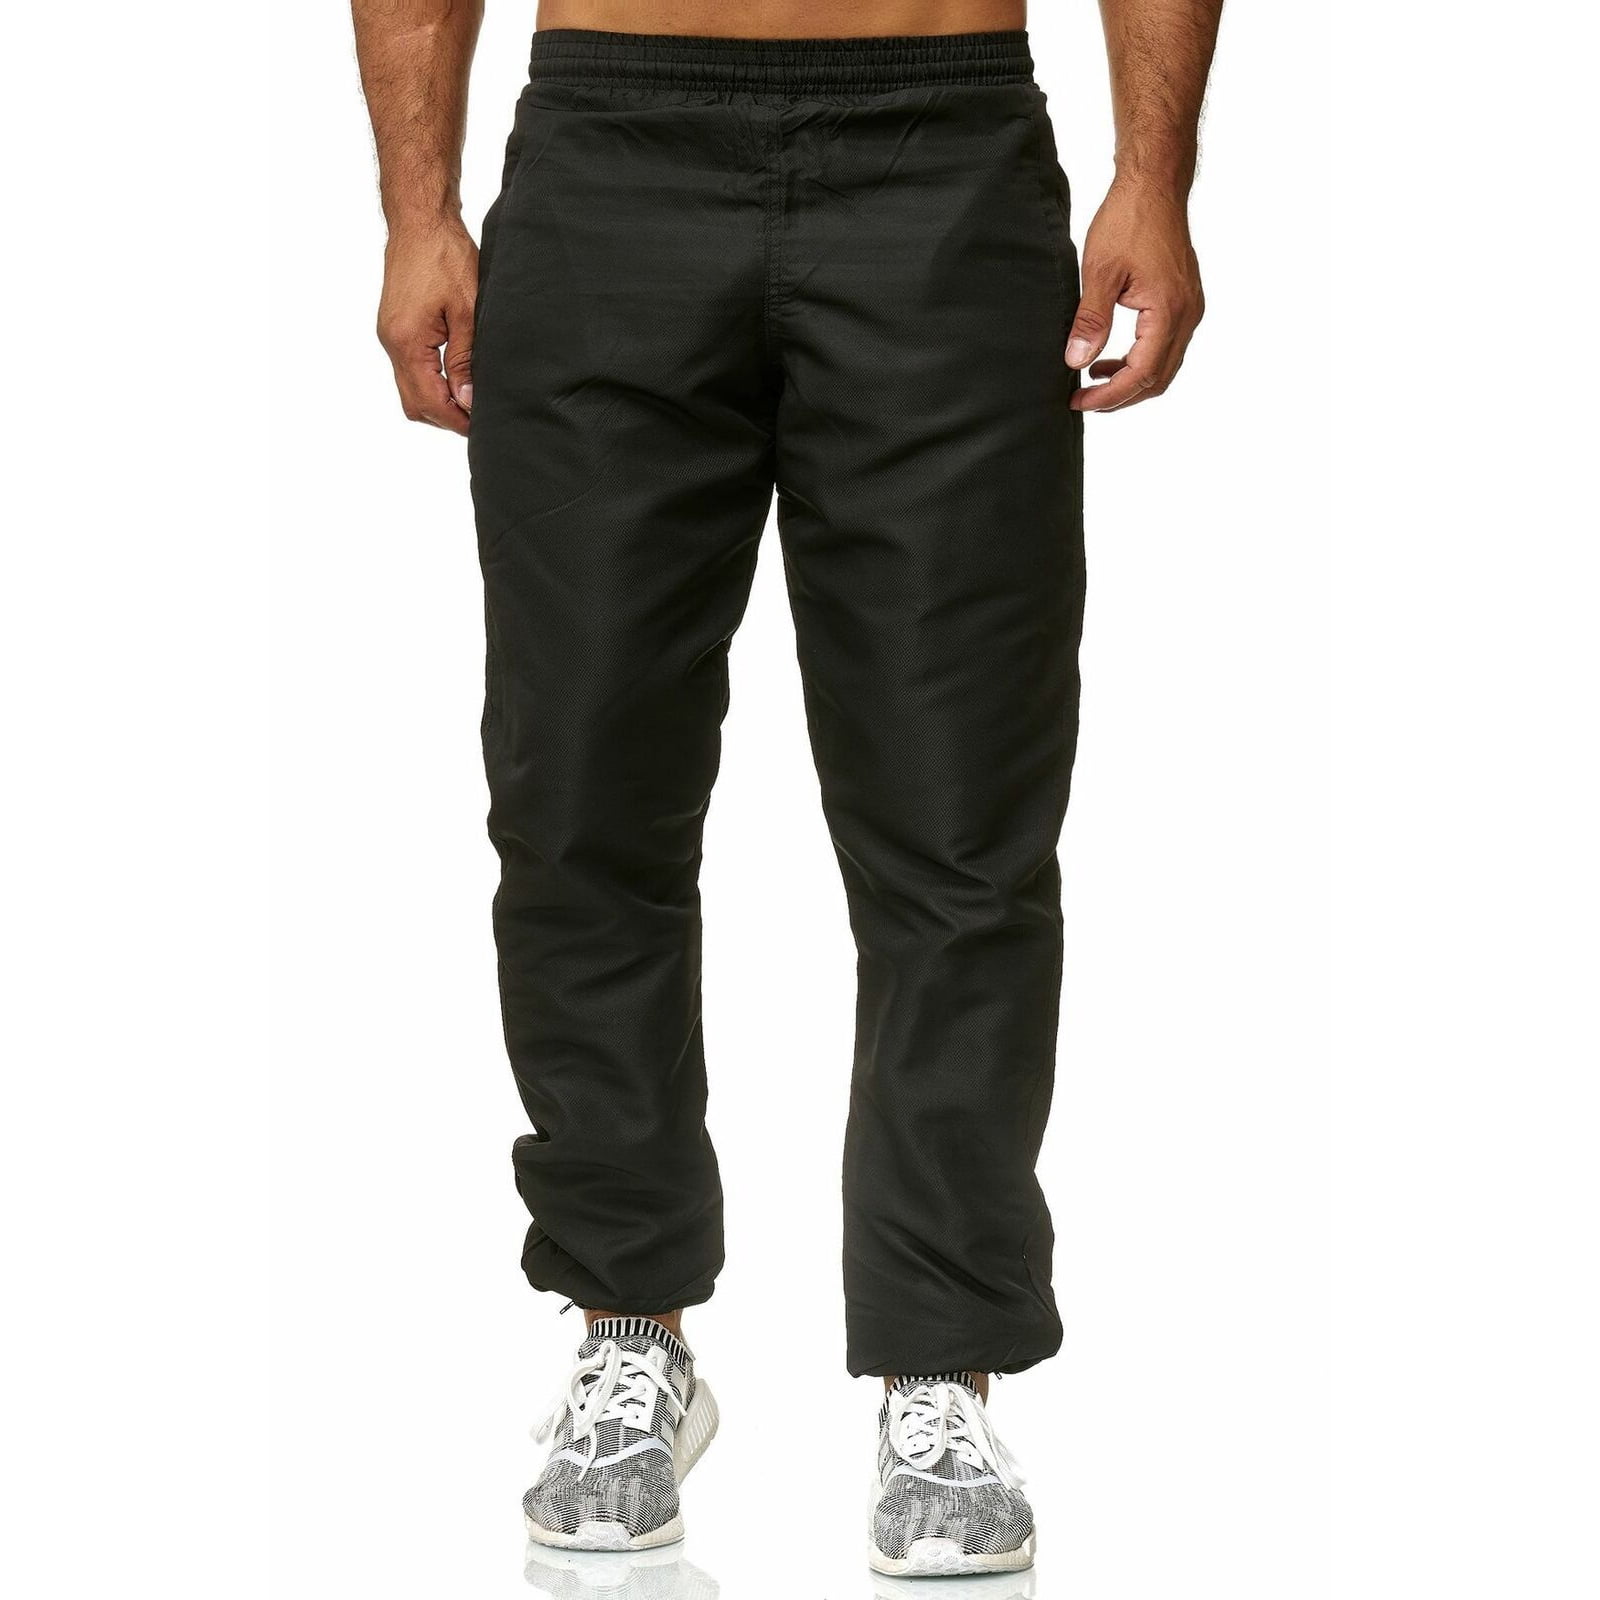 SELX Men Jogger Elastic Waist Pure Color Casual Pocket Pants Trousers